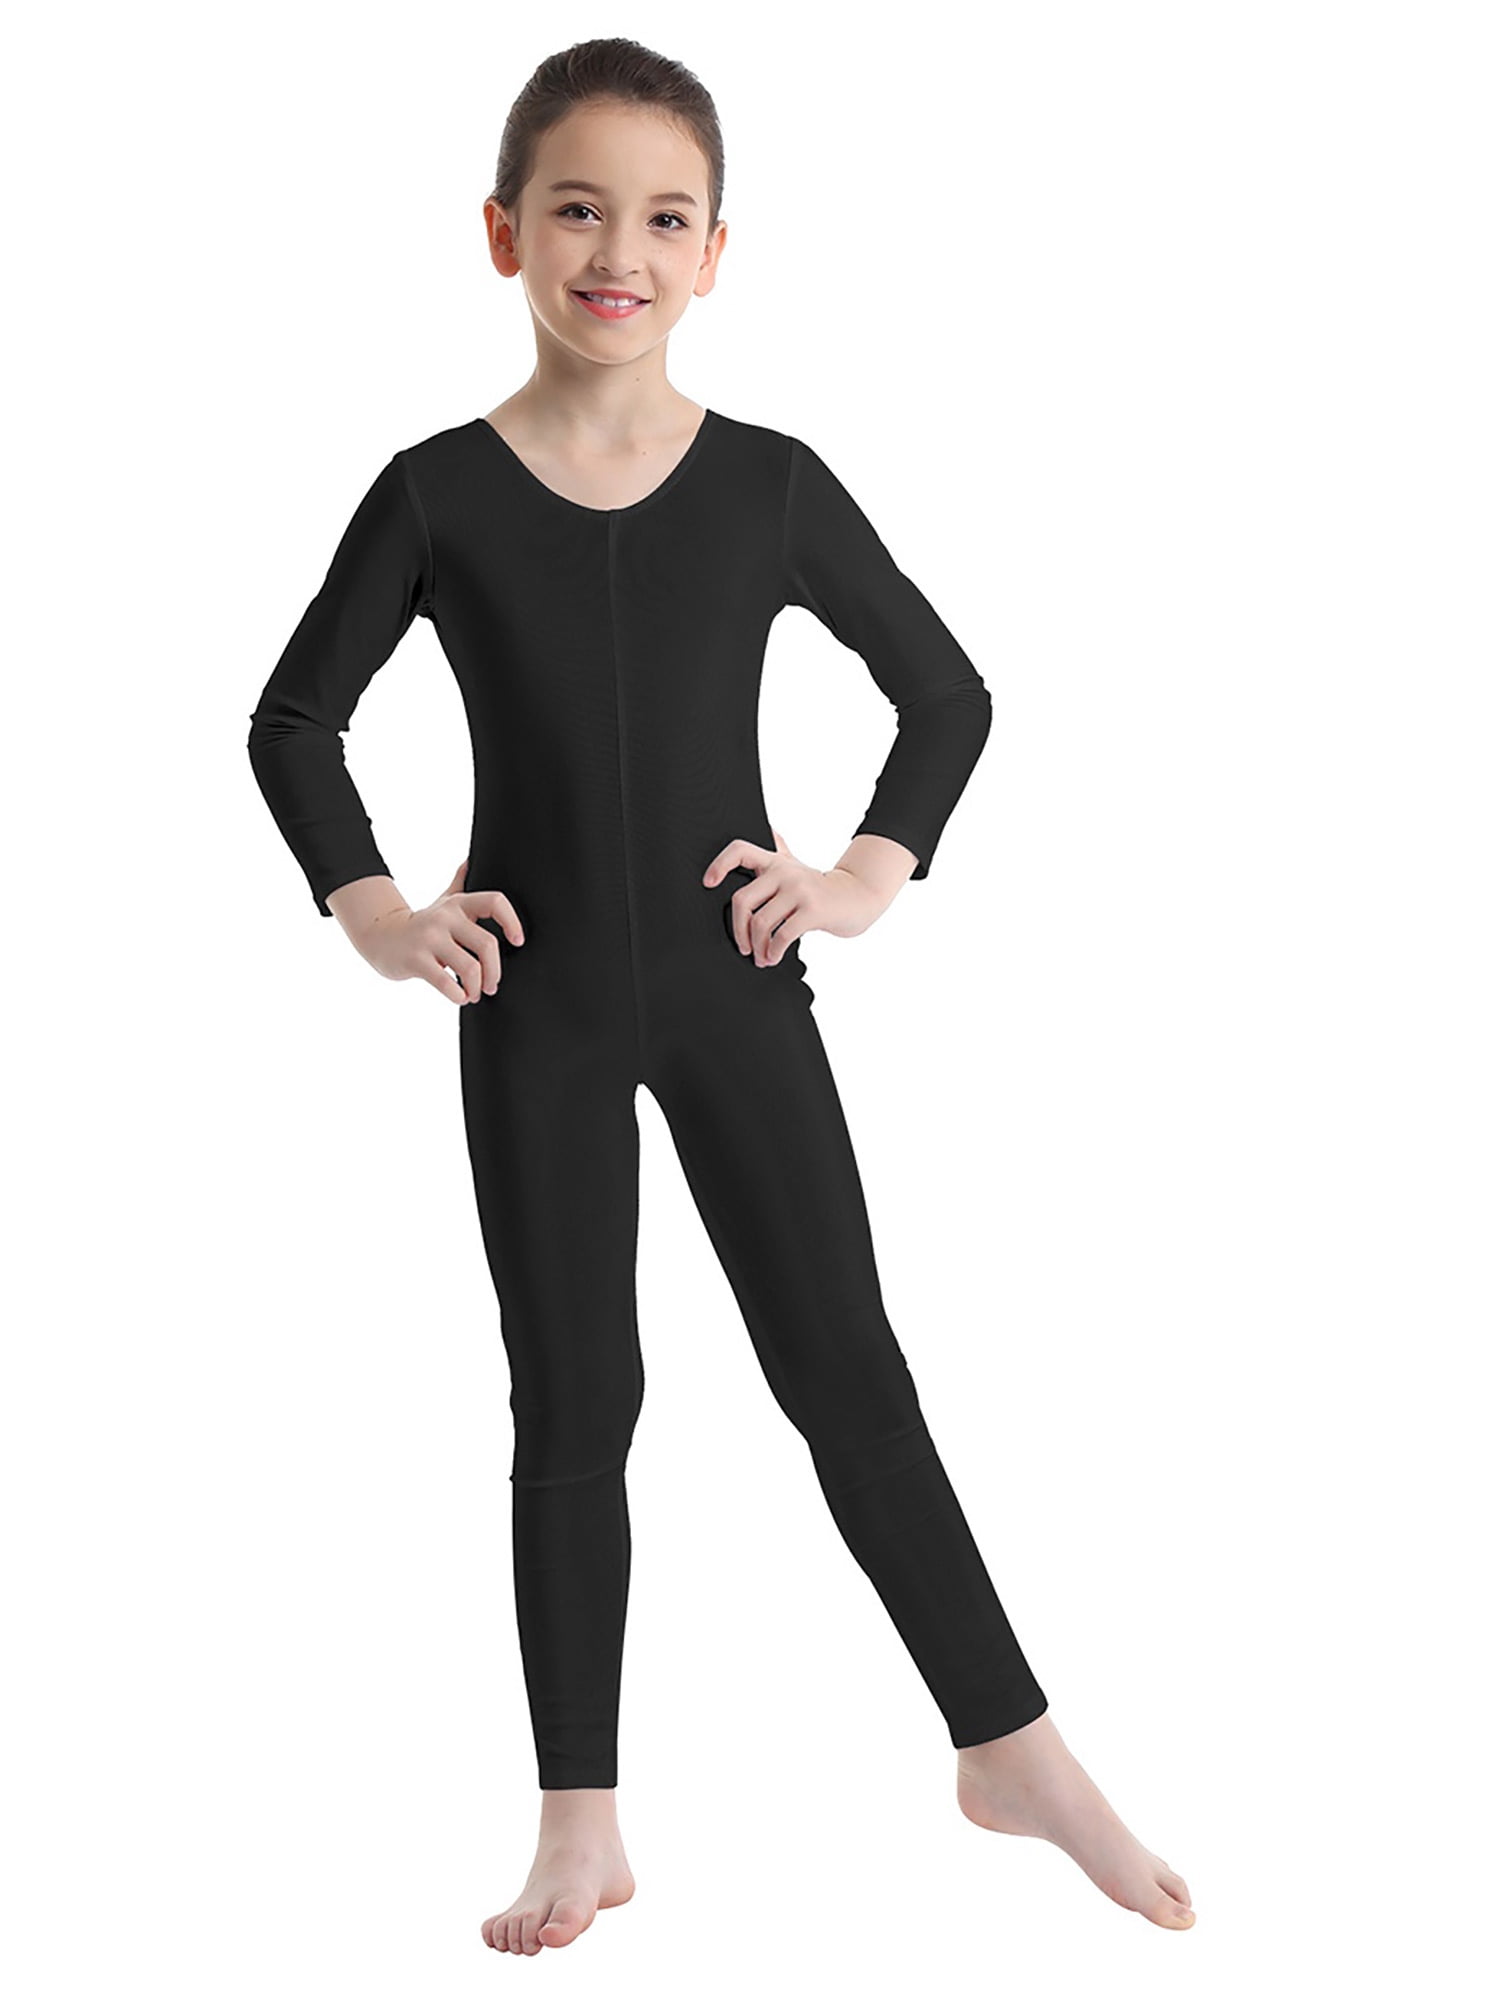 Kids Girl Uniform Dance Gymnastics Ballet Long Sleeve Leotards Jumpsuit Age 5-12 